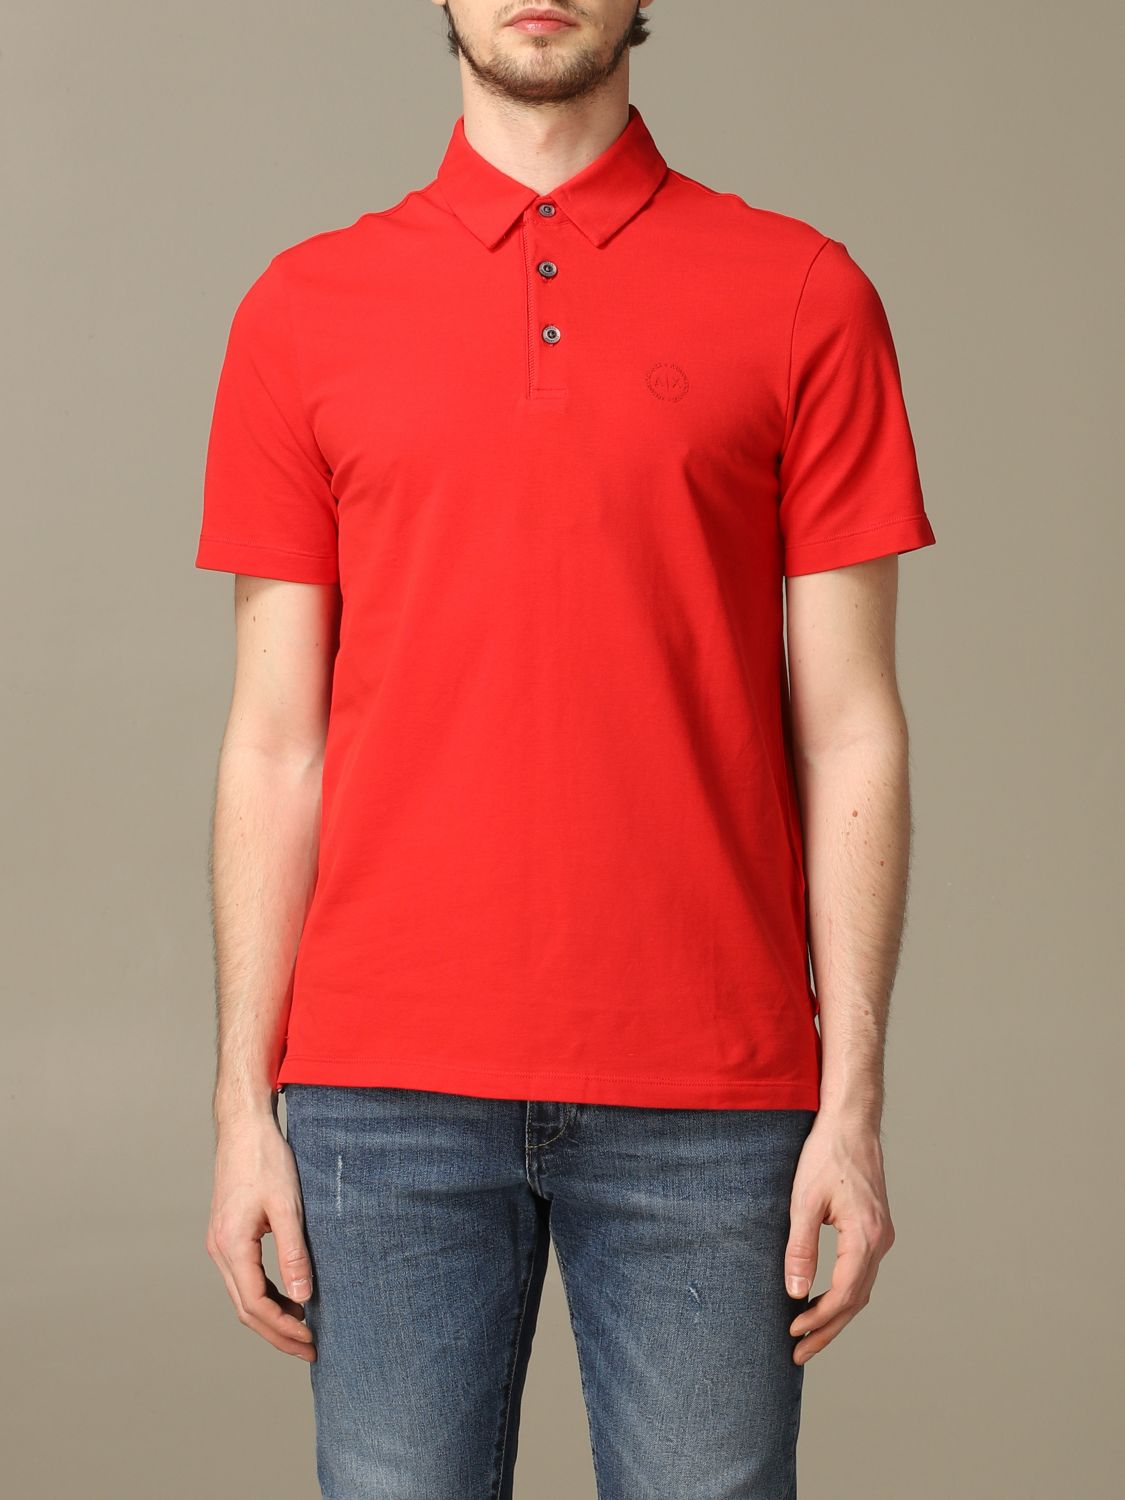 red armani exchange t shirt